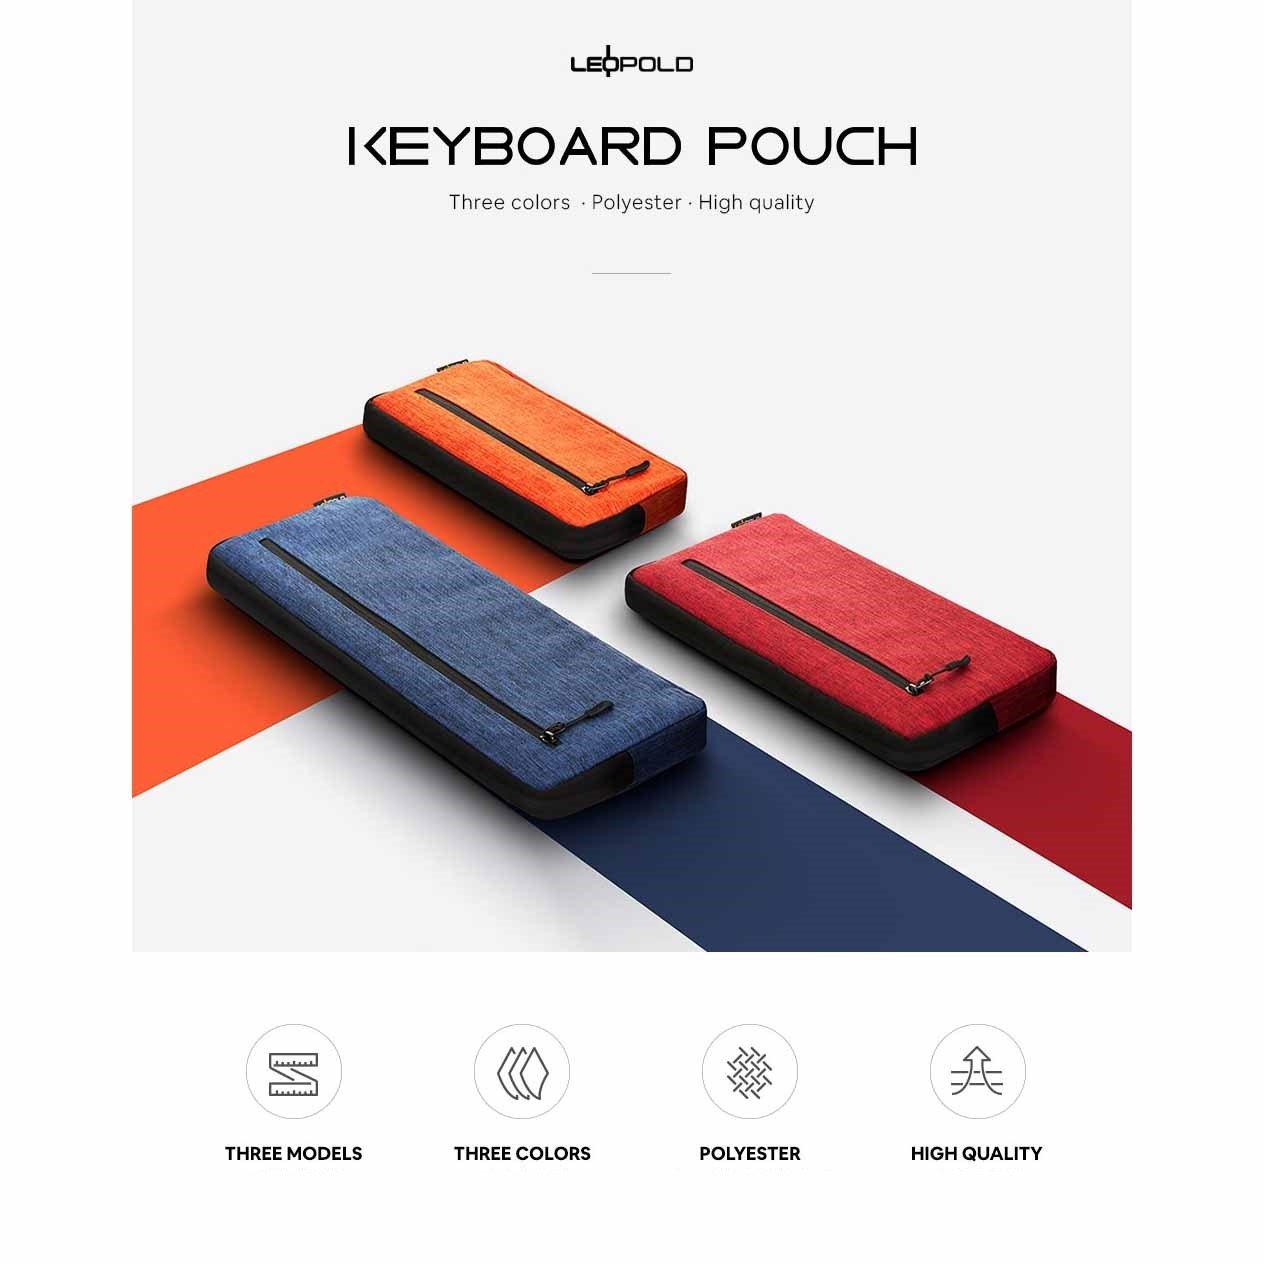 Leopold Canvas Keyboard Bag - Fullsize / 100% Keyboard Carrying Case MKHYJ66SXB |39539|